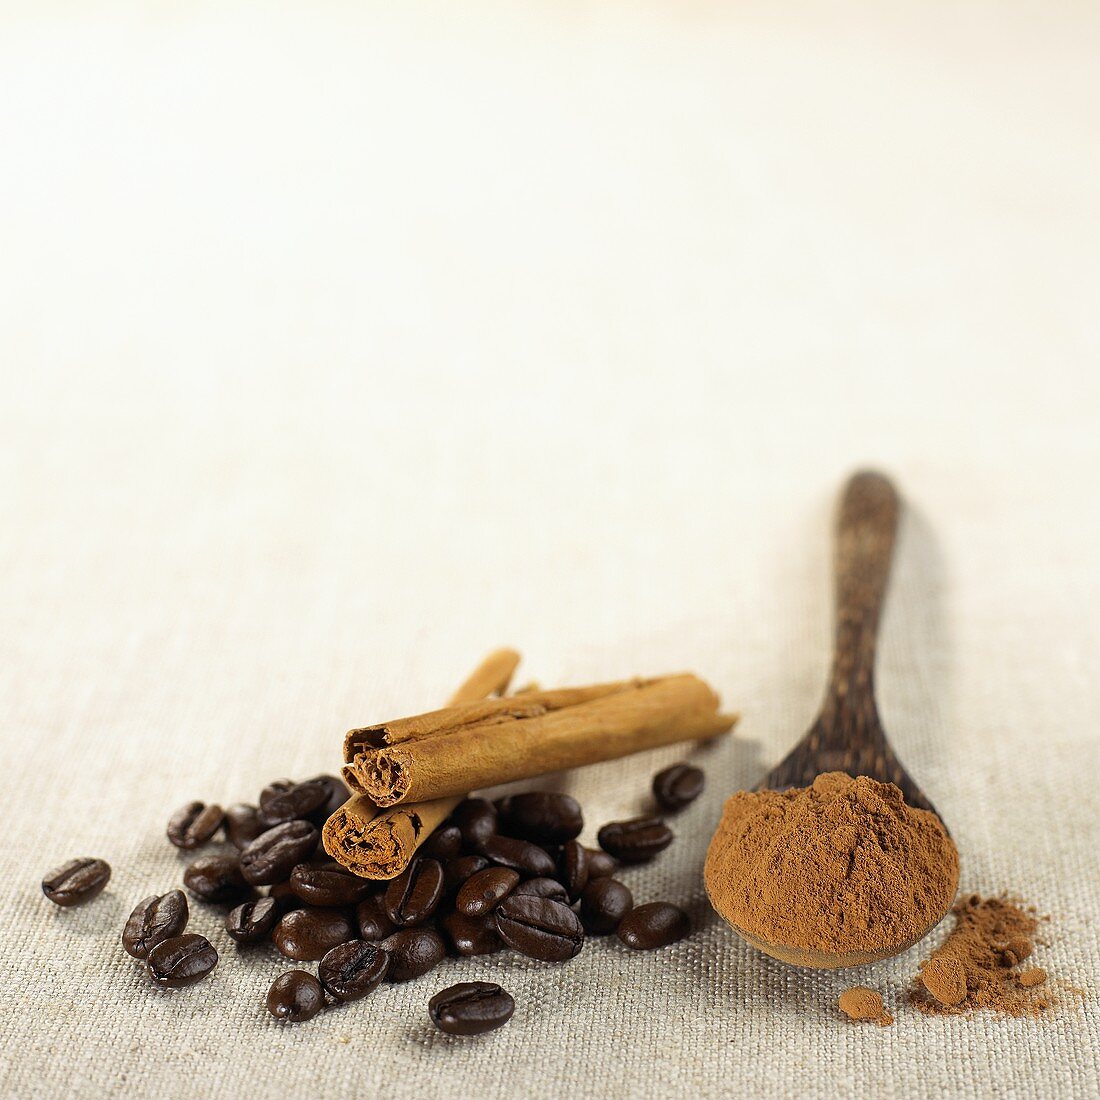 Coffee beans, cinnamon sticks and ground cinnamon